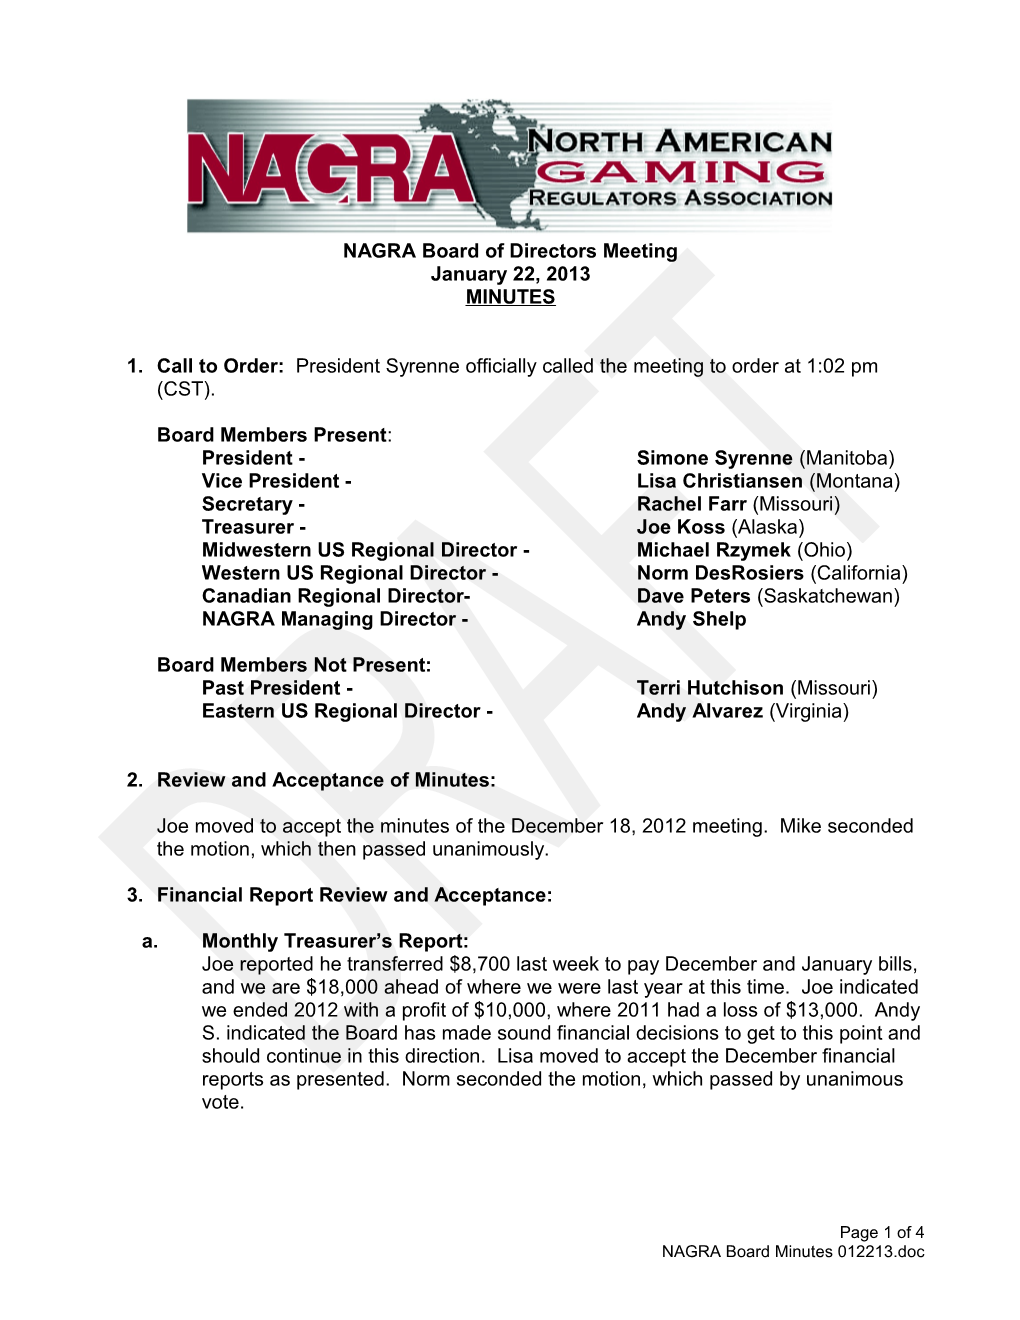 August NAGRA Board Meeting Minutes